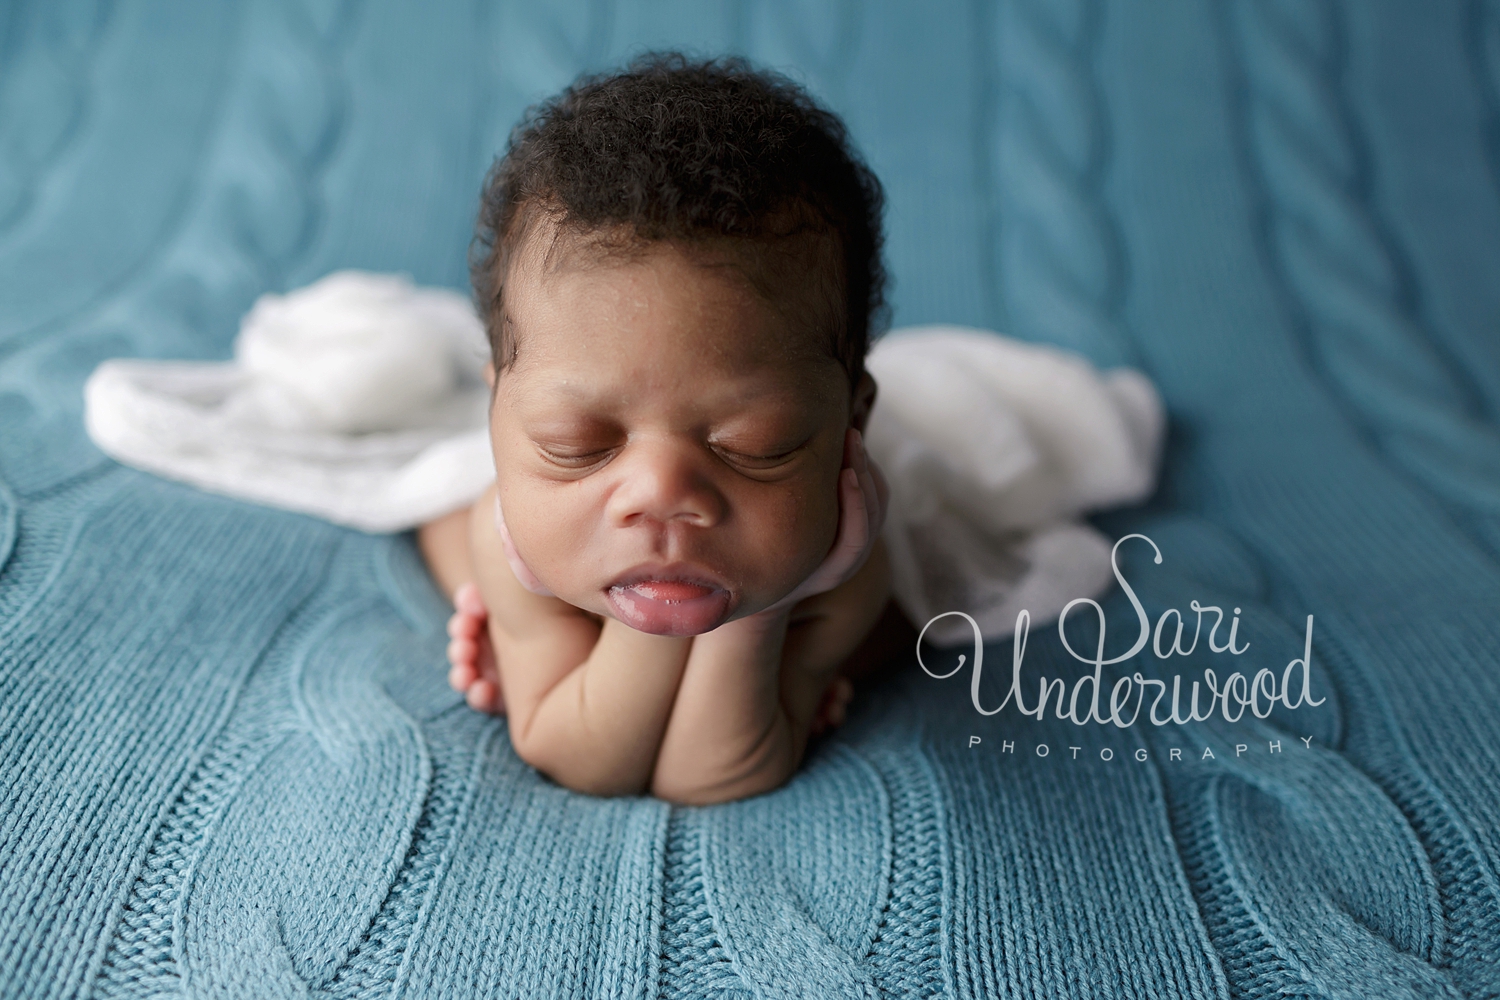 Orange County Florida newborn baby photos